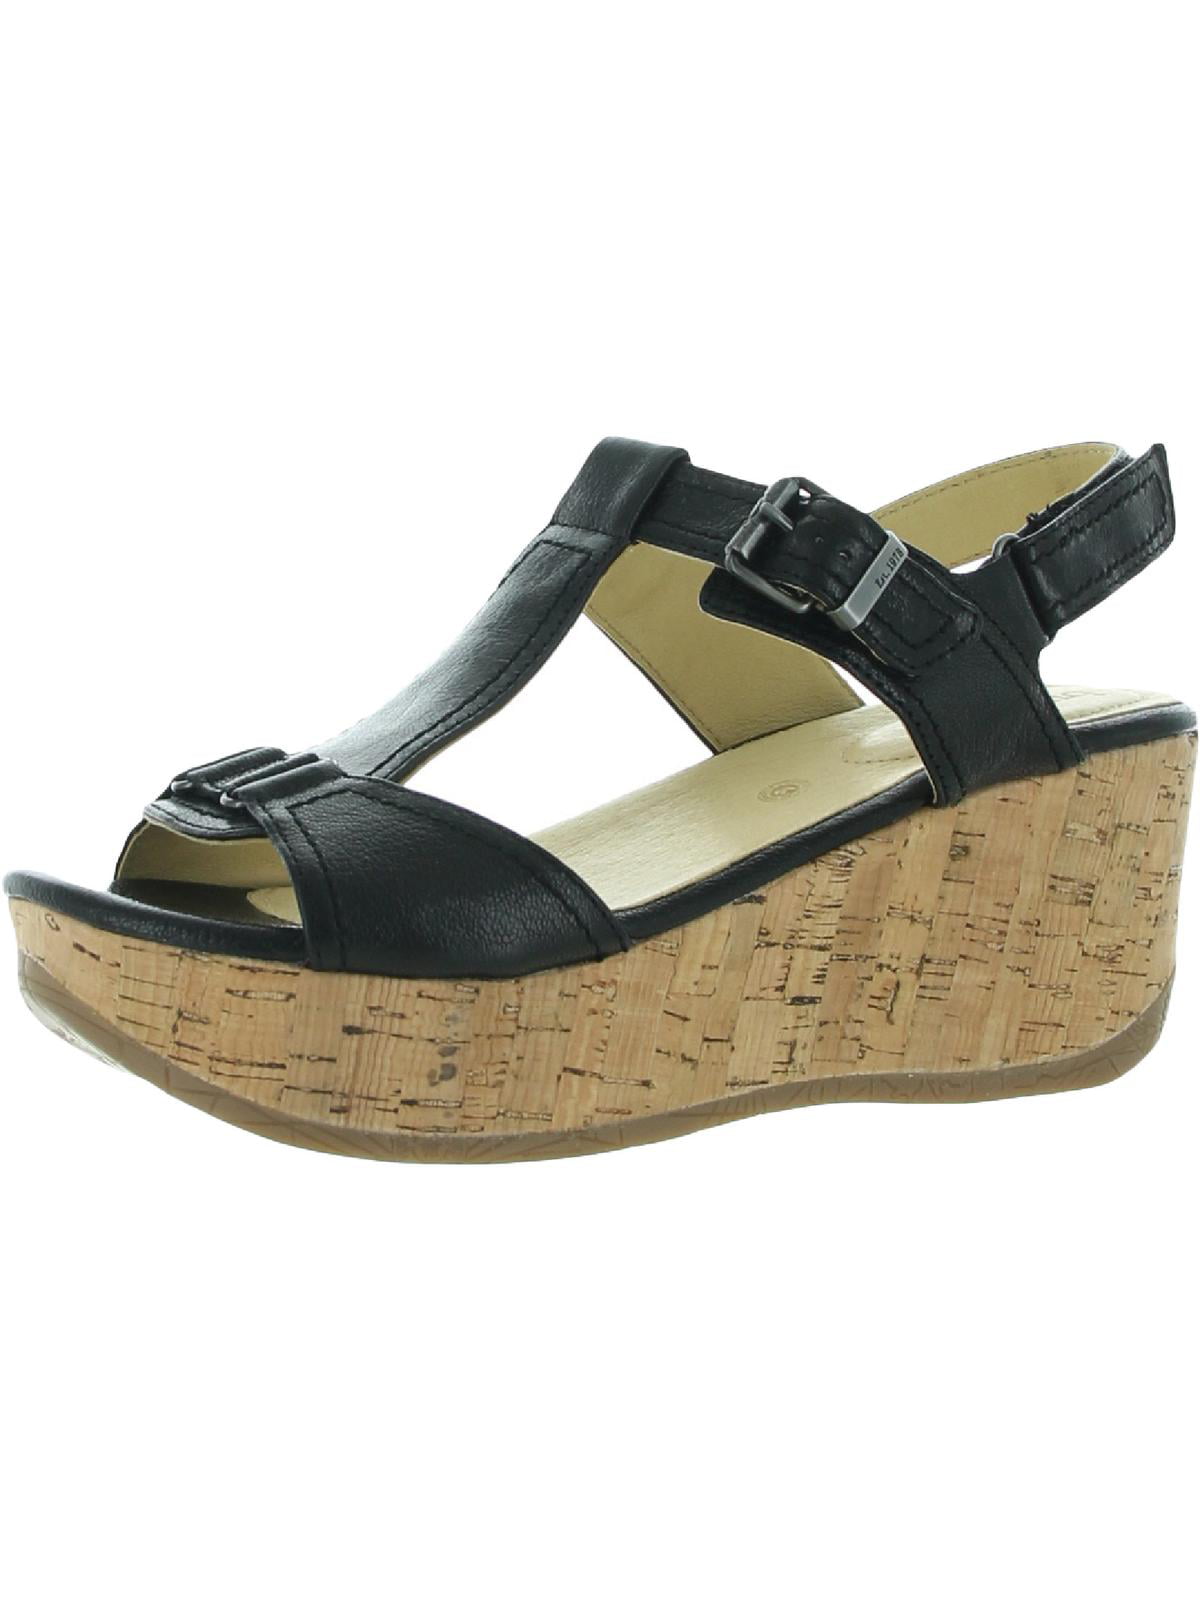 Details about   Bussola Sandals for Women Open Toe Ankle Strap Platform Sandals Wide Straps Sand 